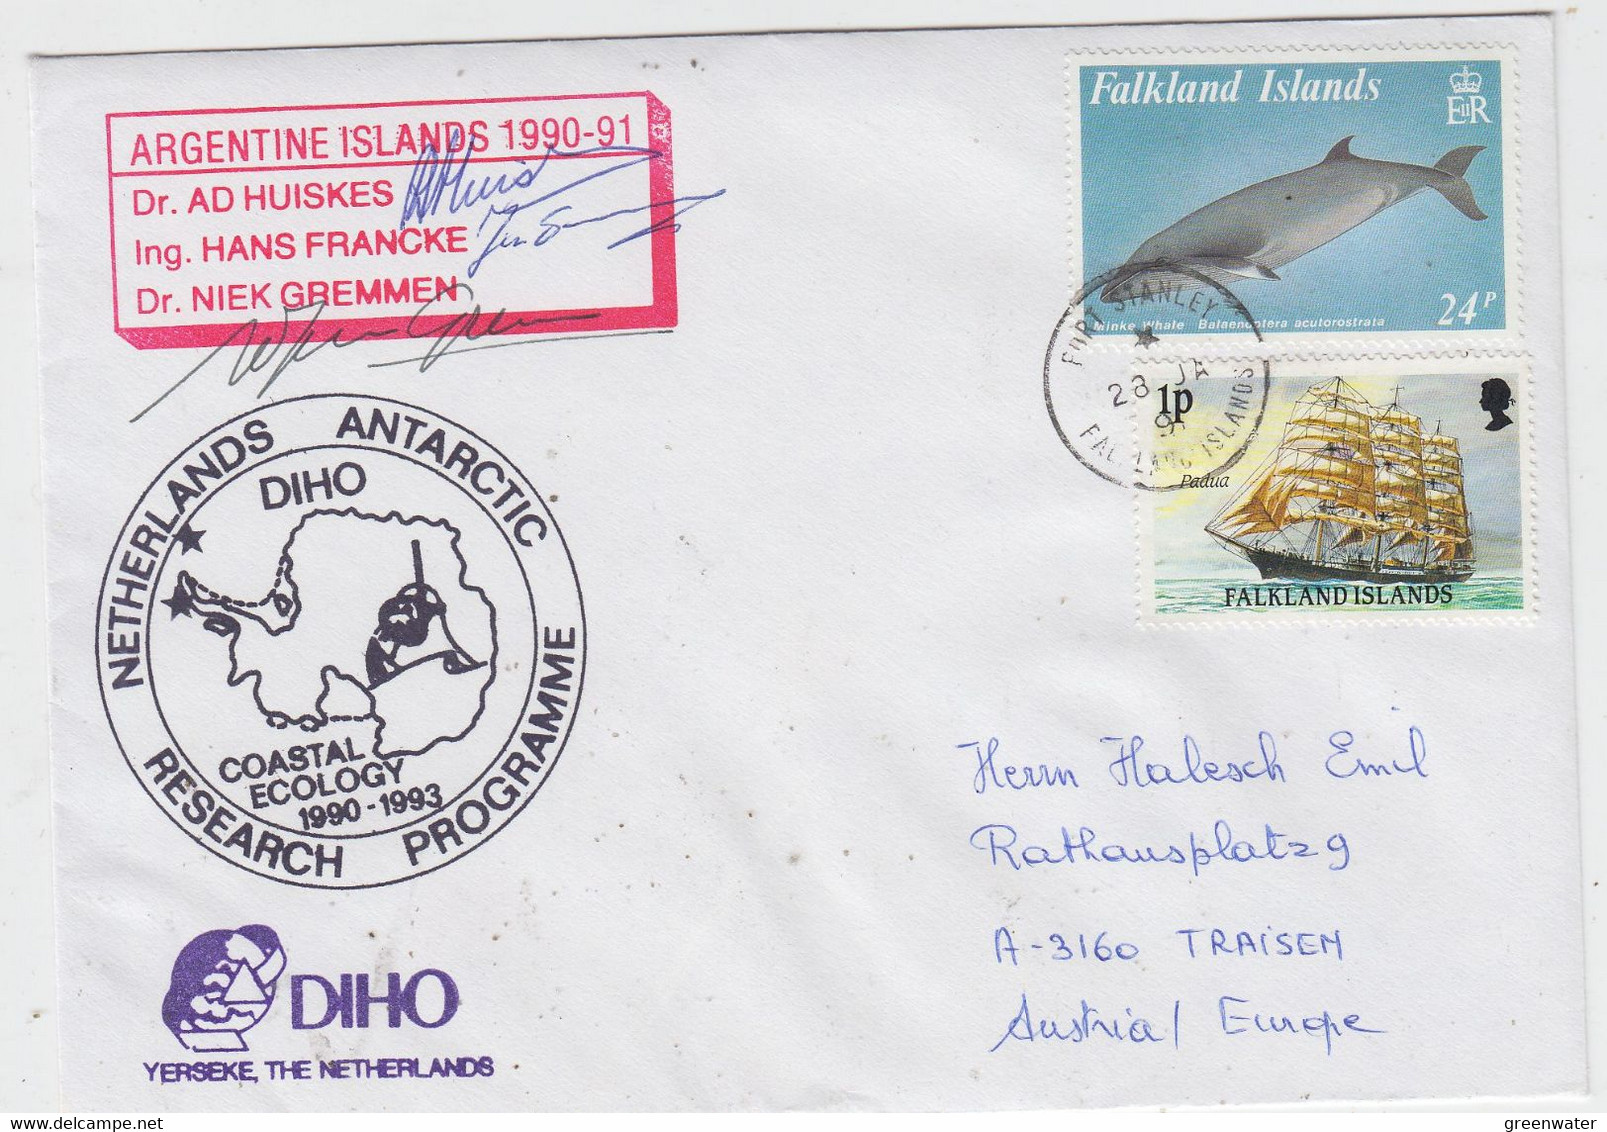 British Antarctic Terr. (BAT)cover+letter Netherlands Ant. Progr. Diho Yerseke 3 Signatures Ca Faraday 28 JA 1991(NL203) - Covers & Documents